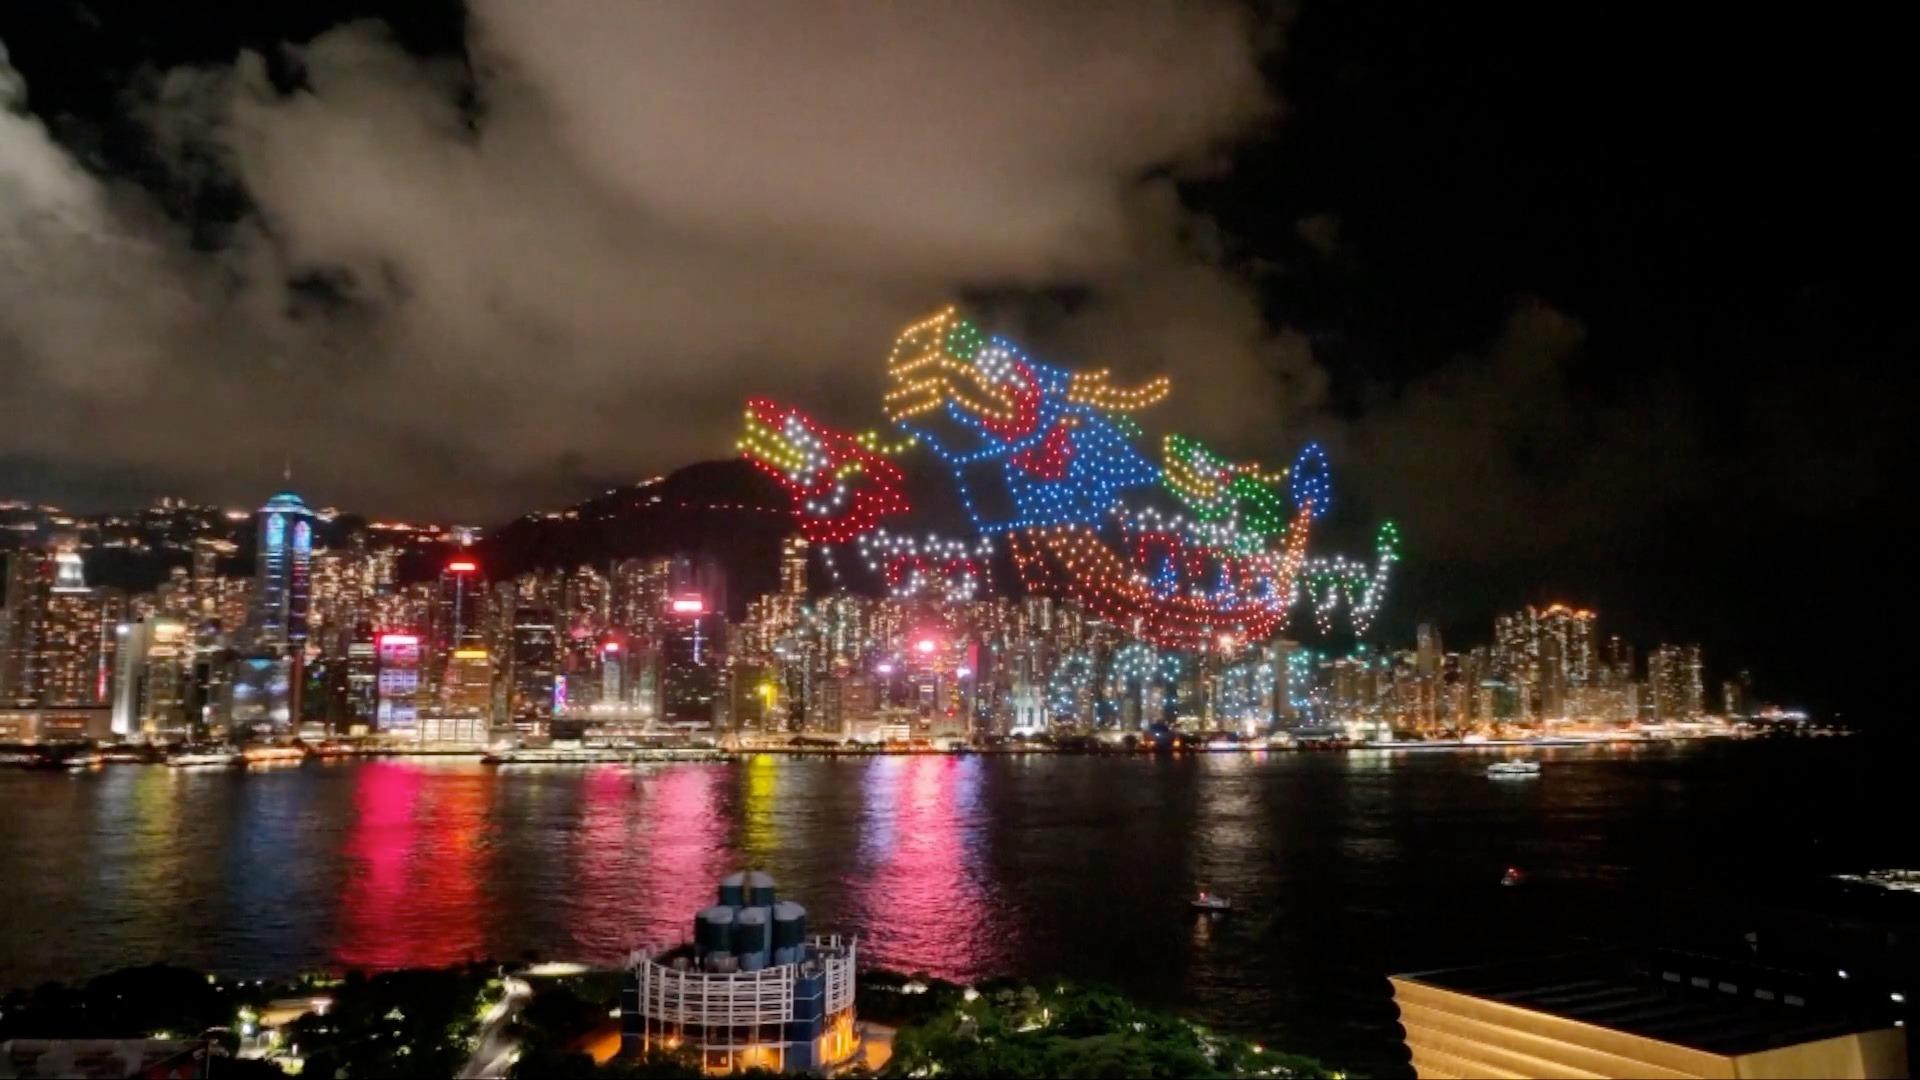 Over 1,000 drones stage light show in HKSAR to celebrate Dragon Boat Festival